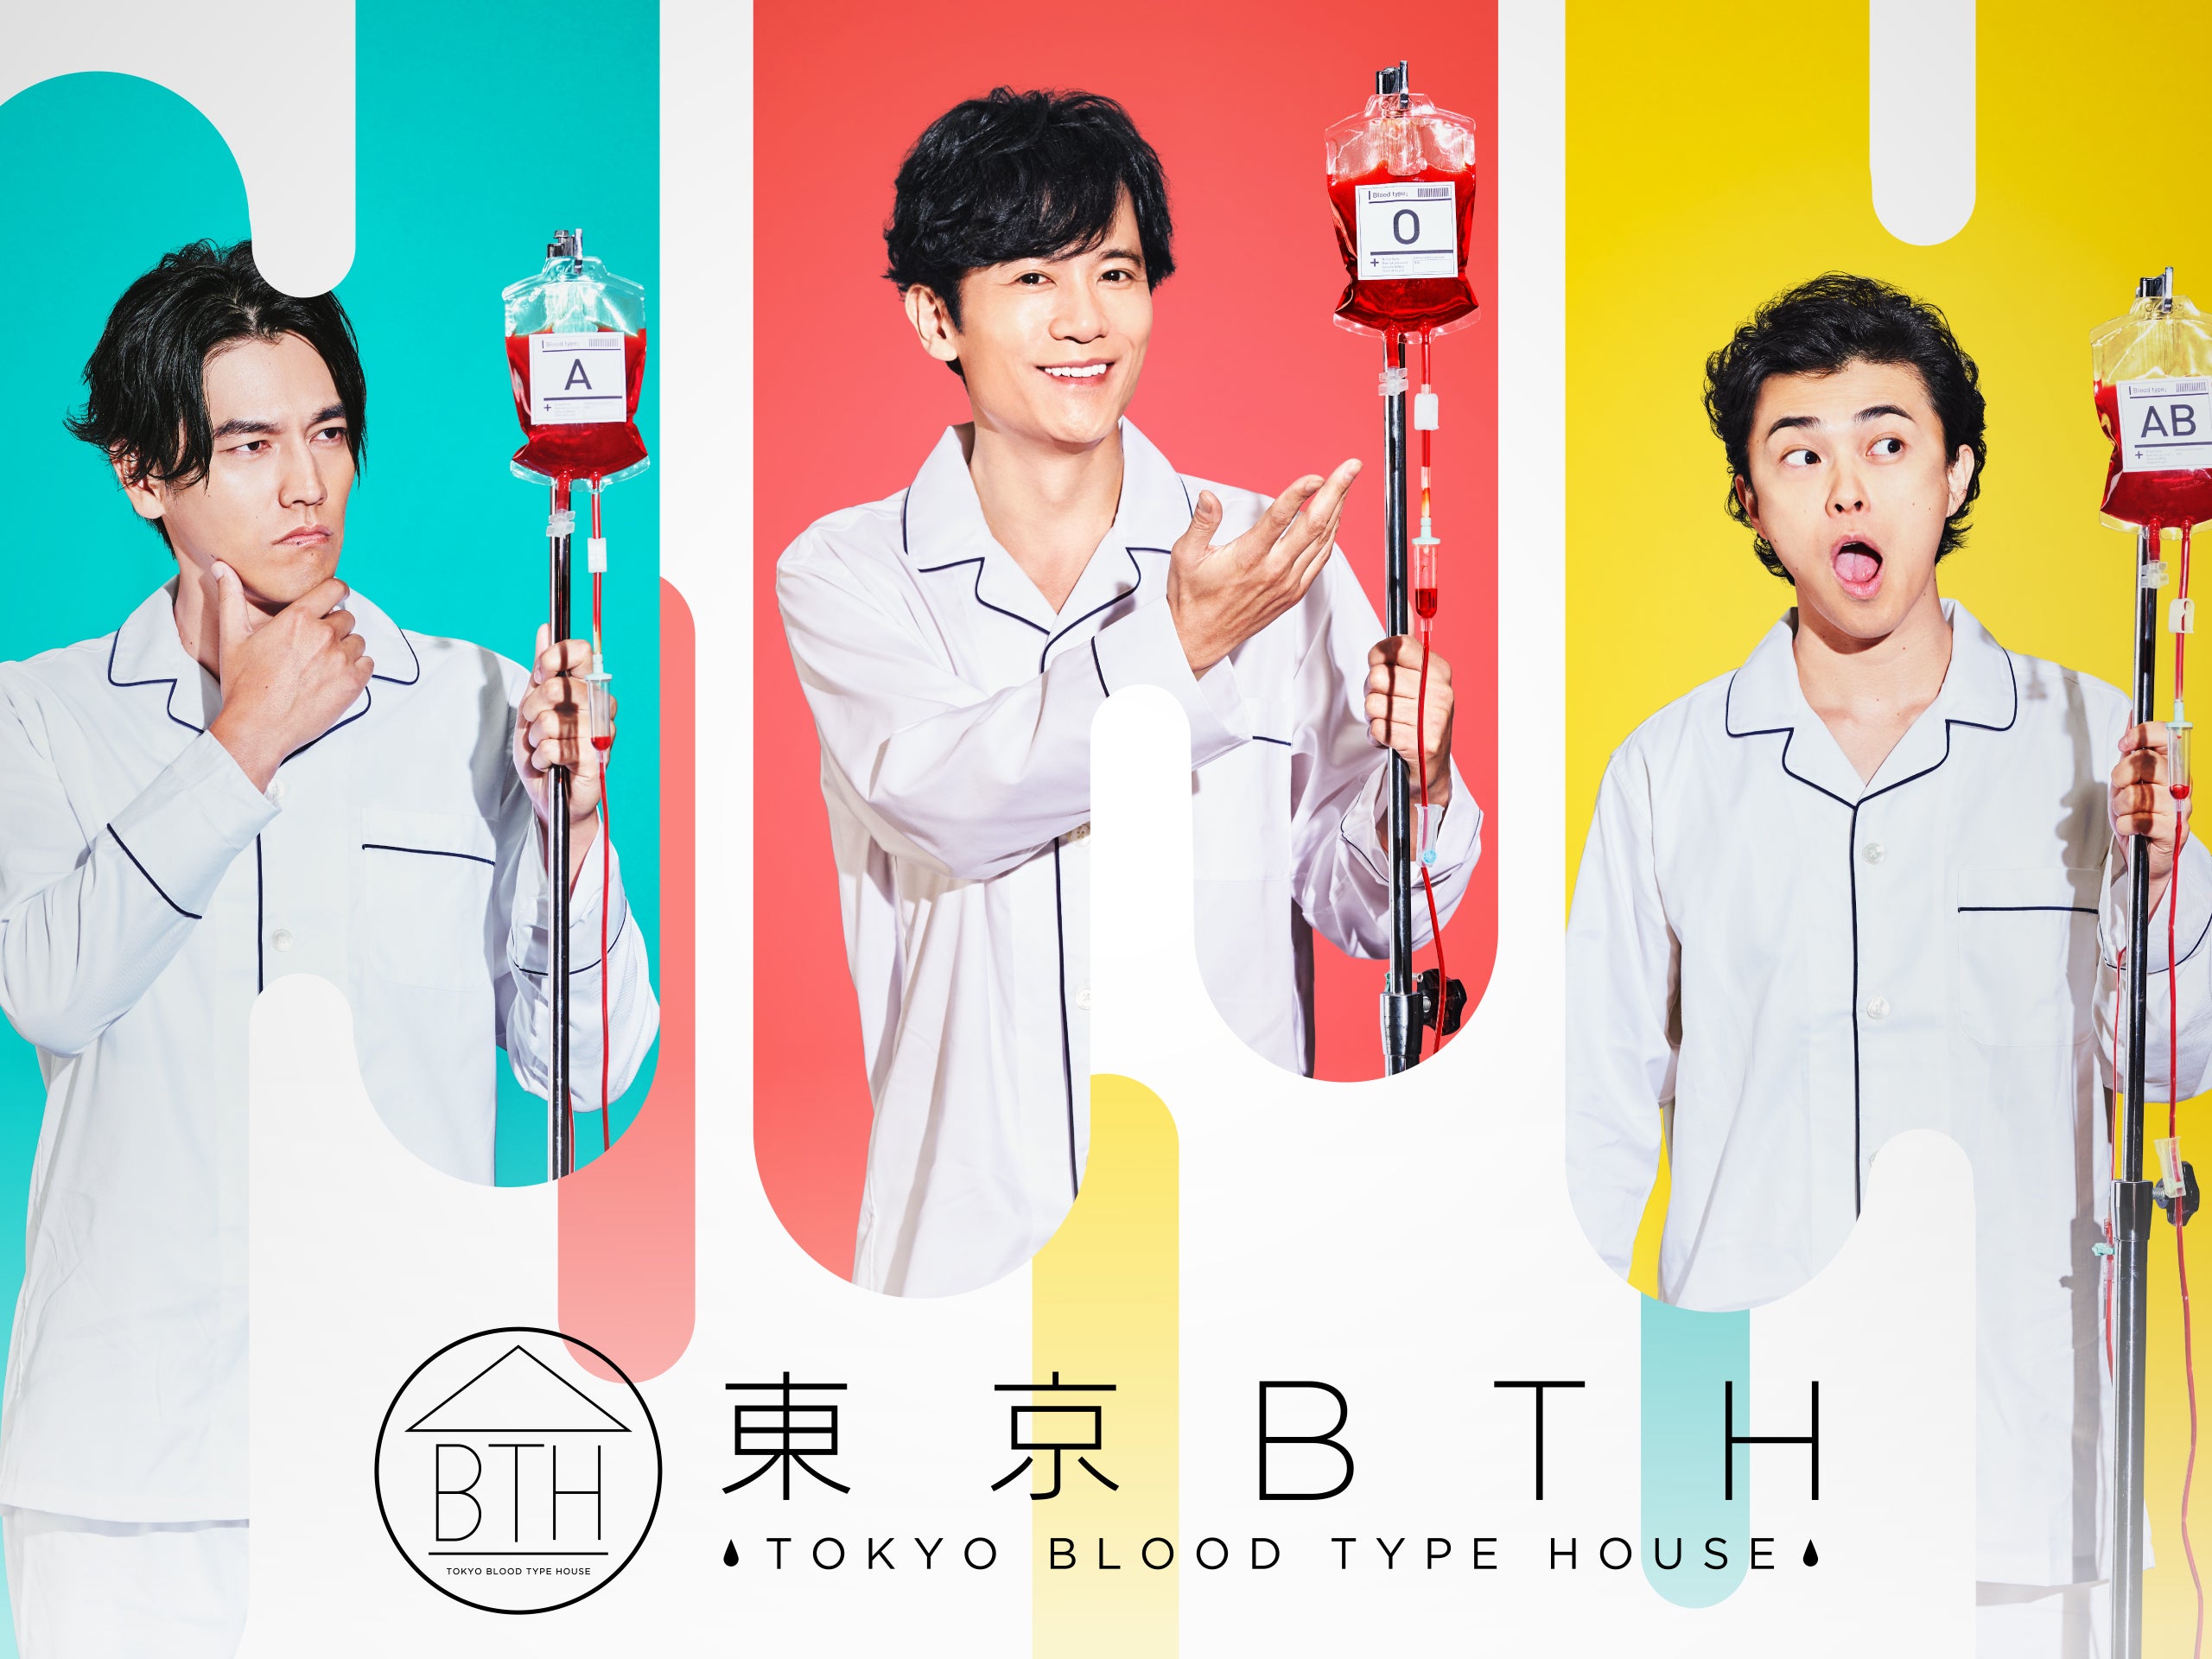 TV ratings for Tokyo Bth: Tokyo Blood Type House (東京BTH〜TOKYO BLOOD TYPE HOUSE〜) in Italia. Amazon Prime Video TV series